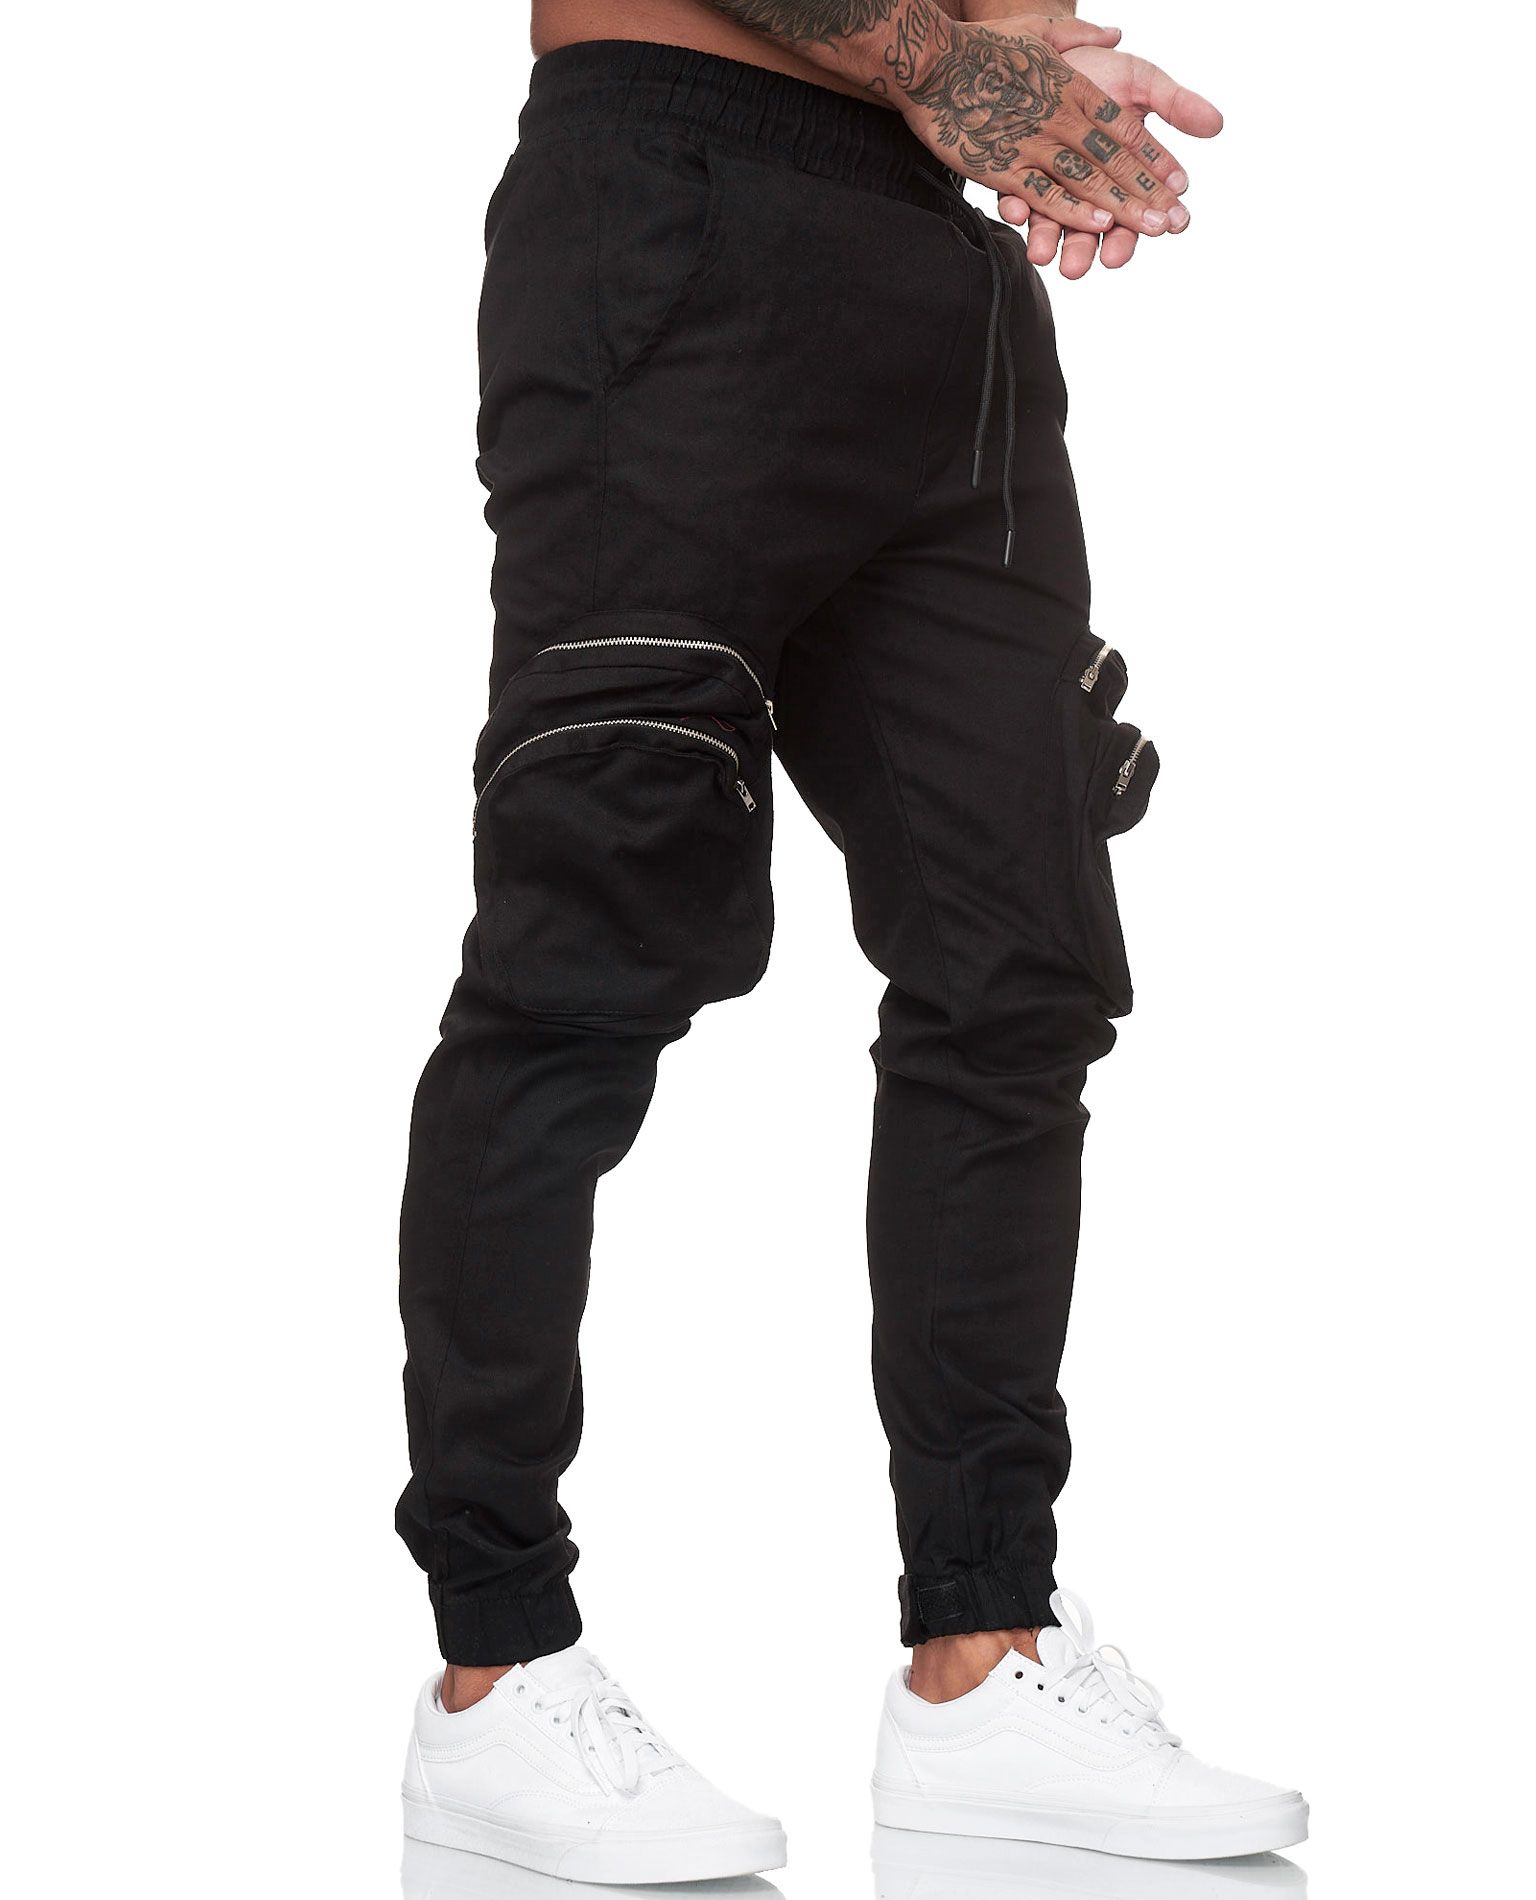 Spodnie Black Pants Jerone - 2046 - Trousers - Jerone.com